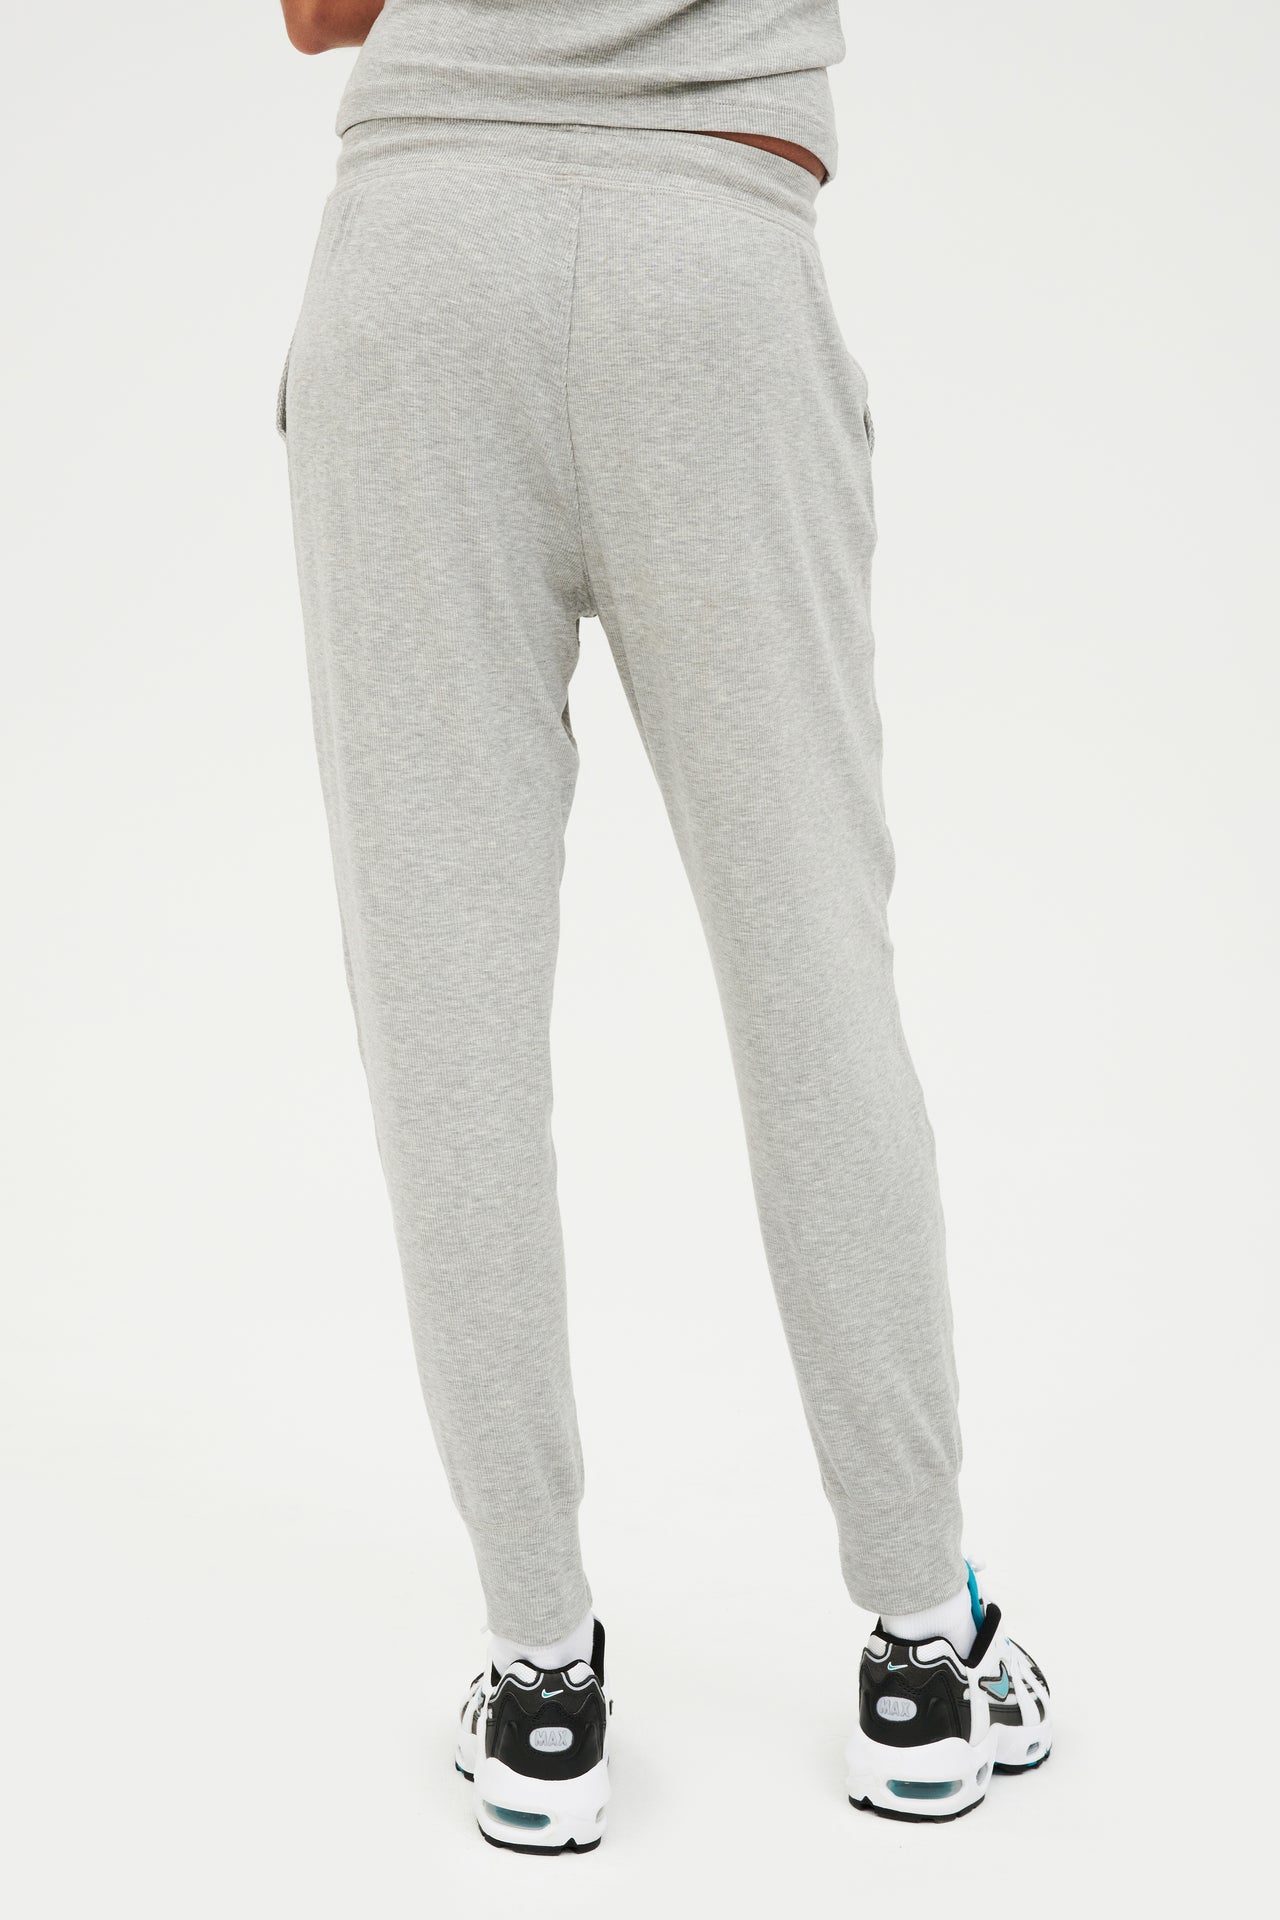 The back view of a woman wearing SPLITS59 Kiki Rib 7/8 Sweatpant in Heather Grey.